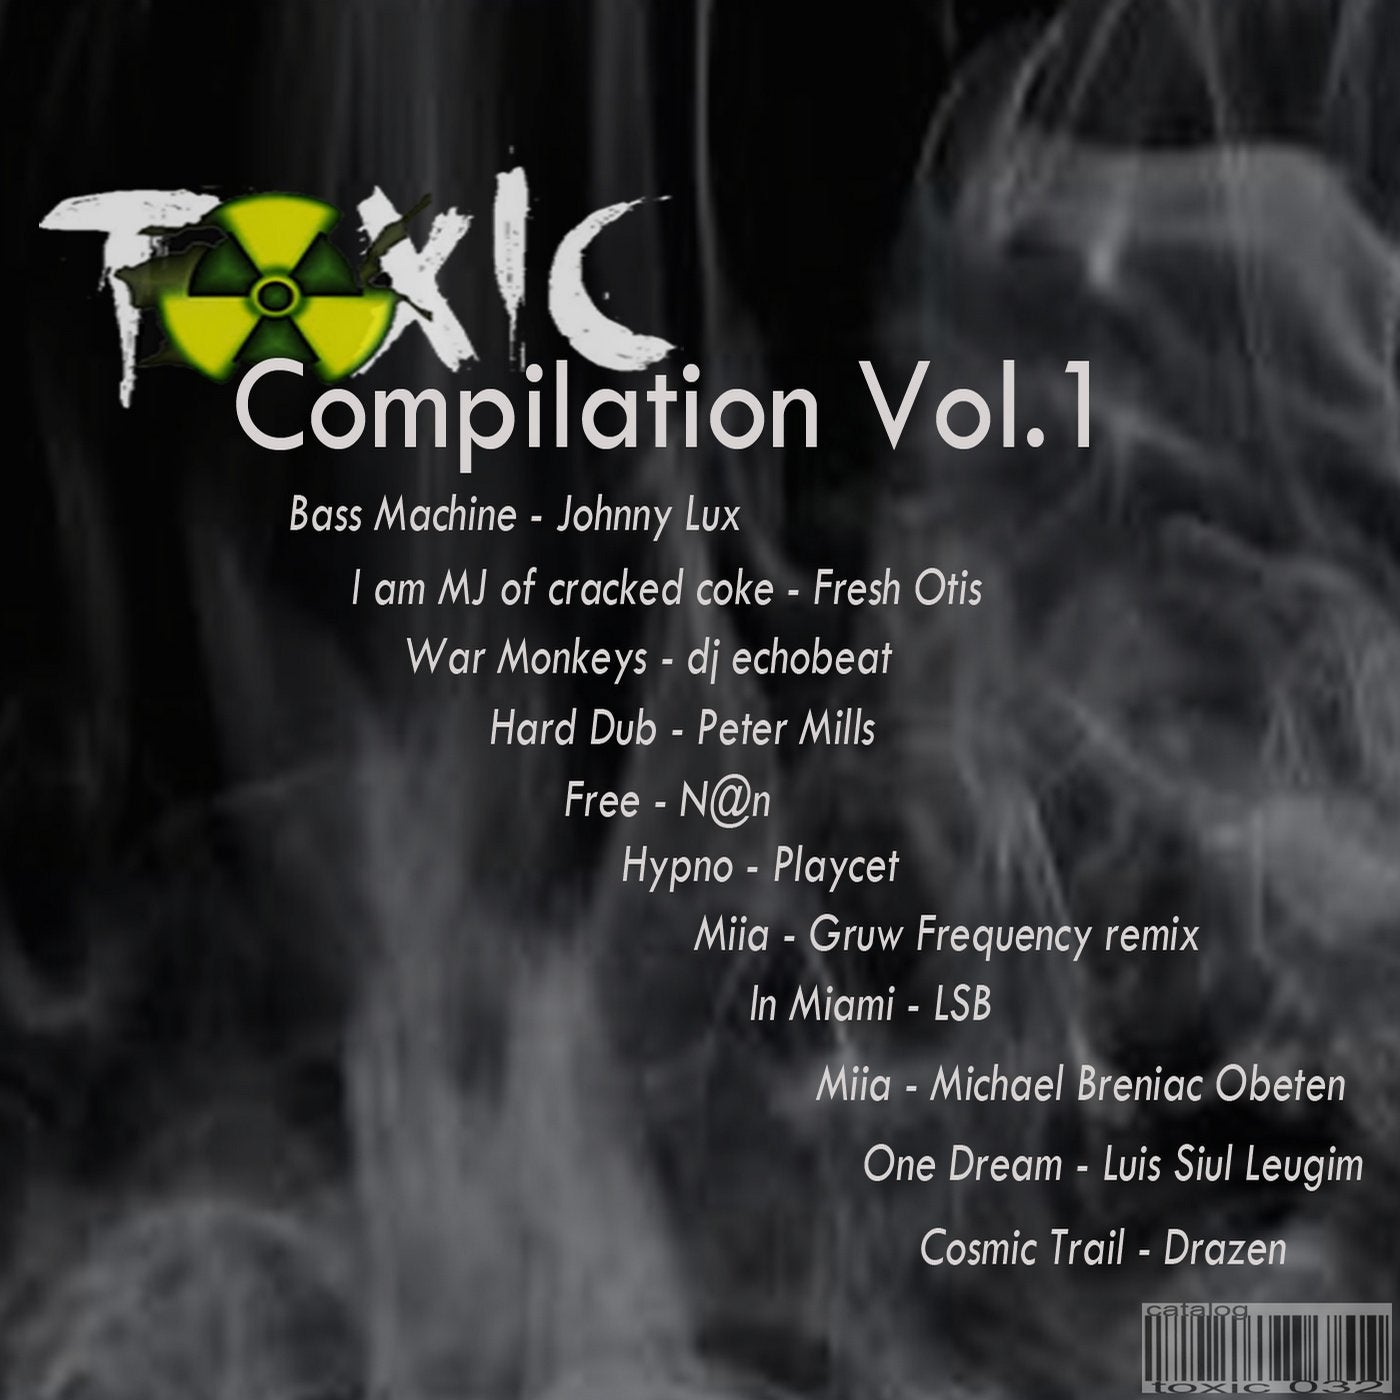 Toxic Compilation Vol.1